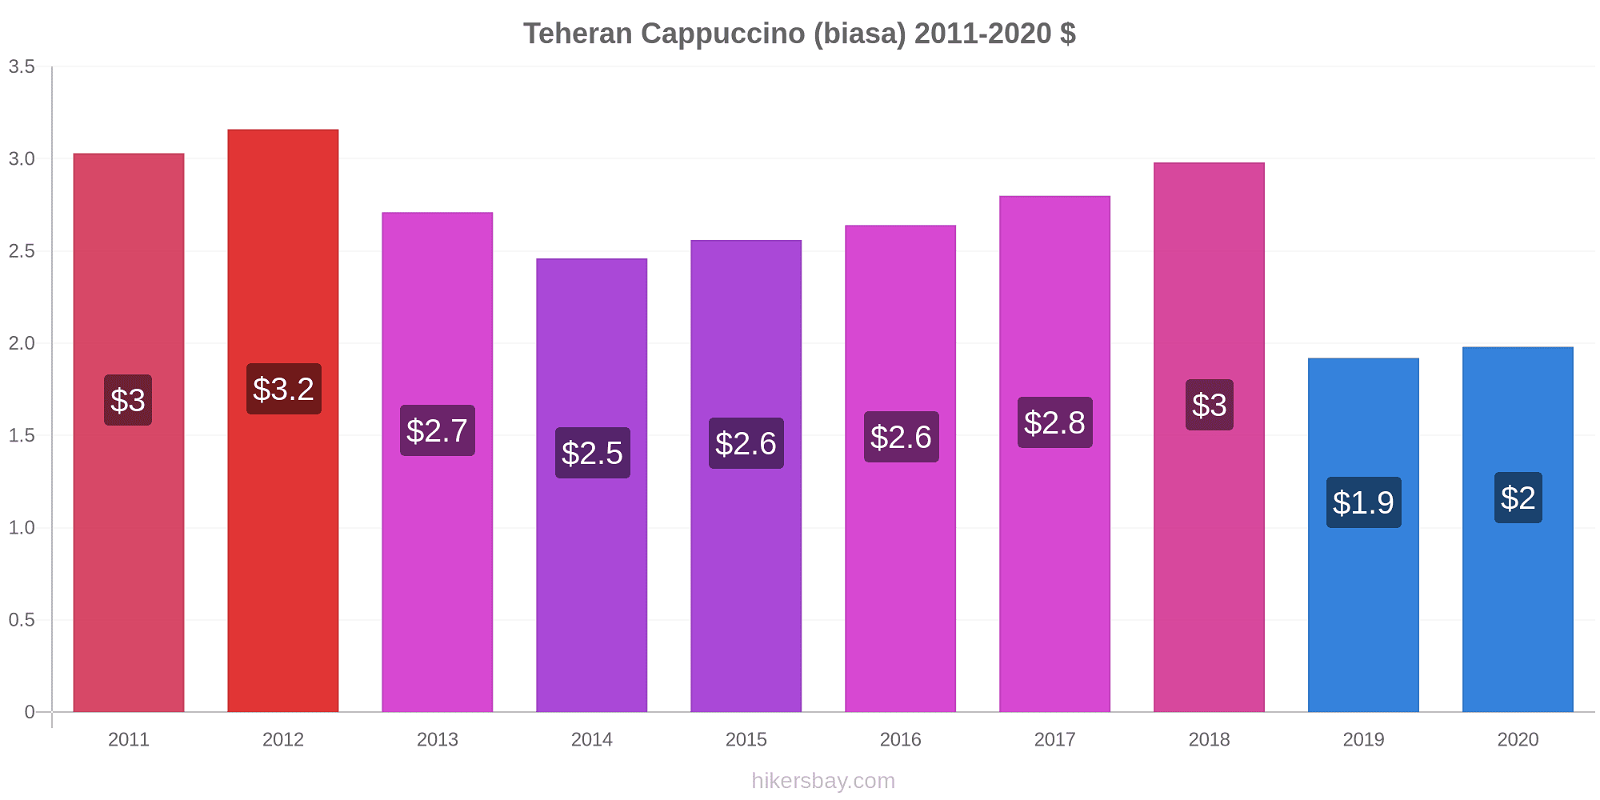 Teheran perubahan harga Cappuccino (biasa) hikersbay.com